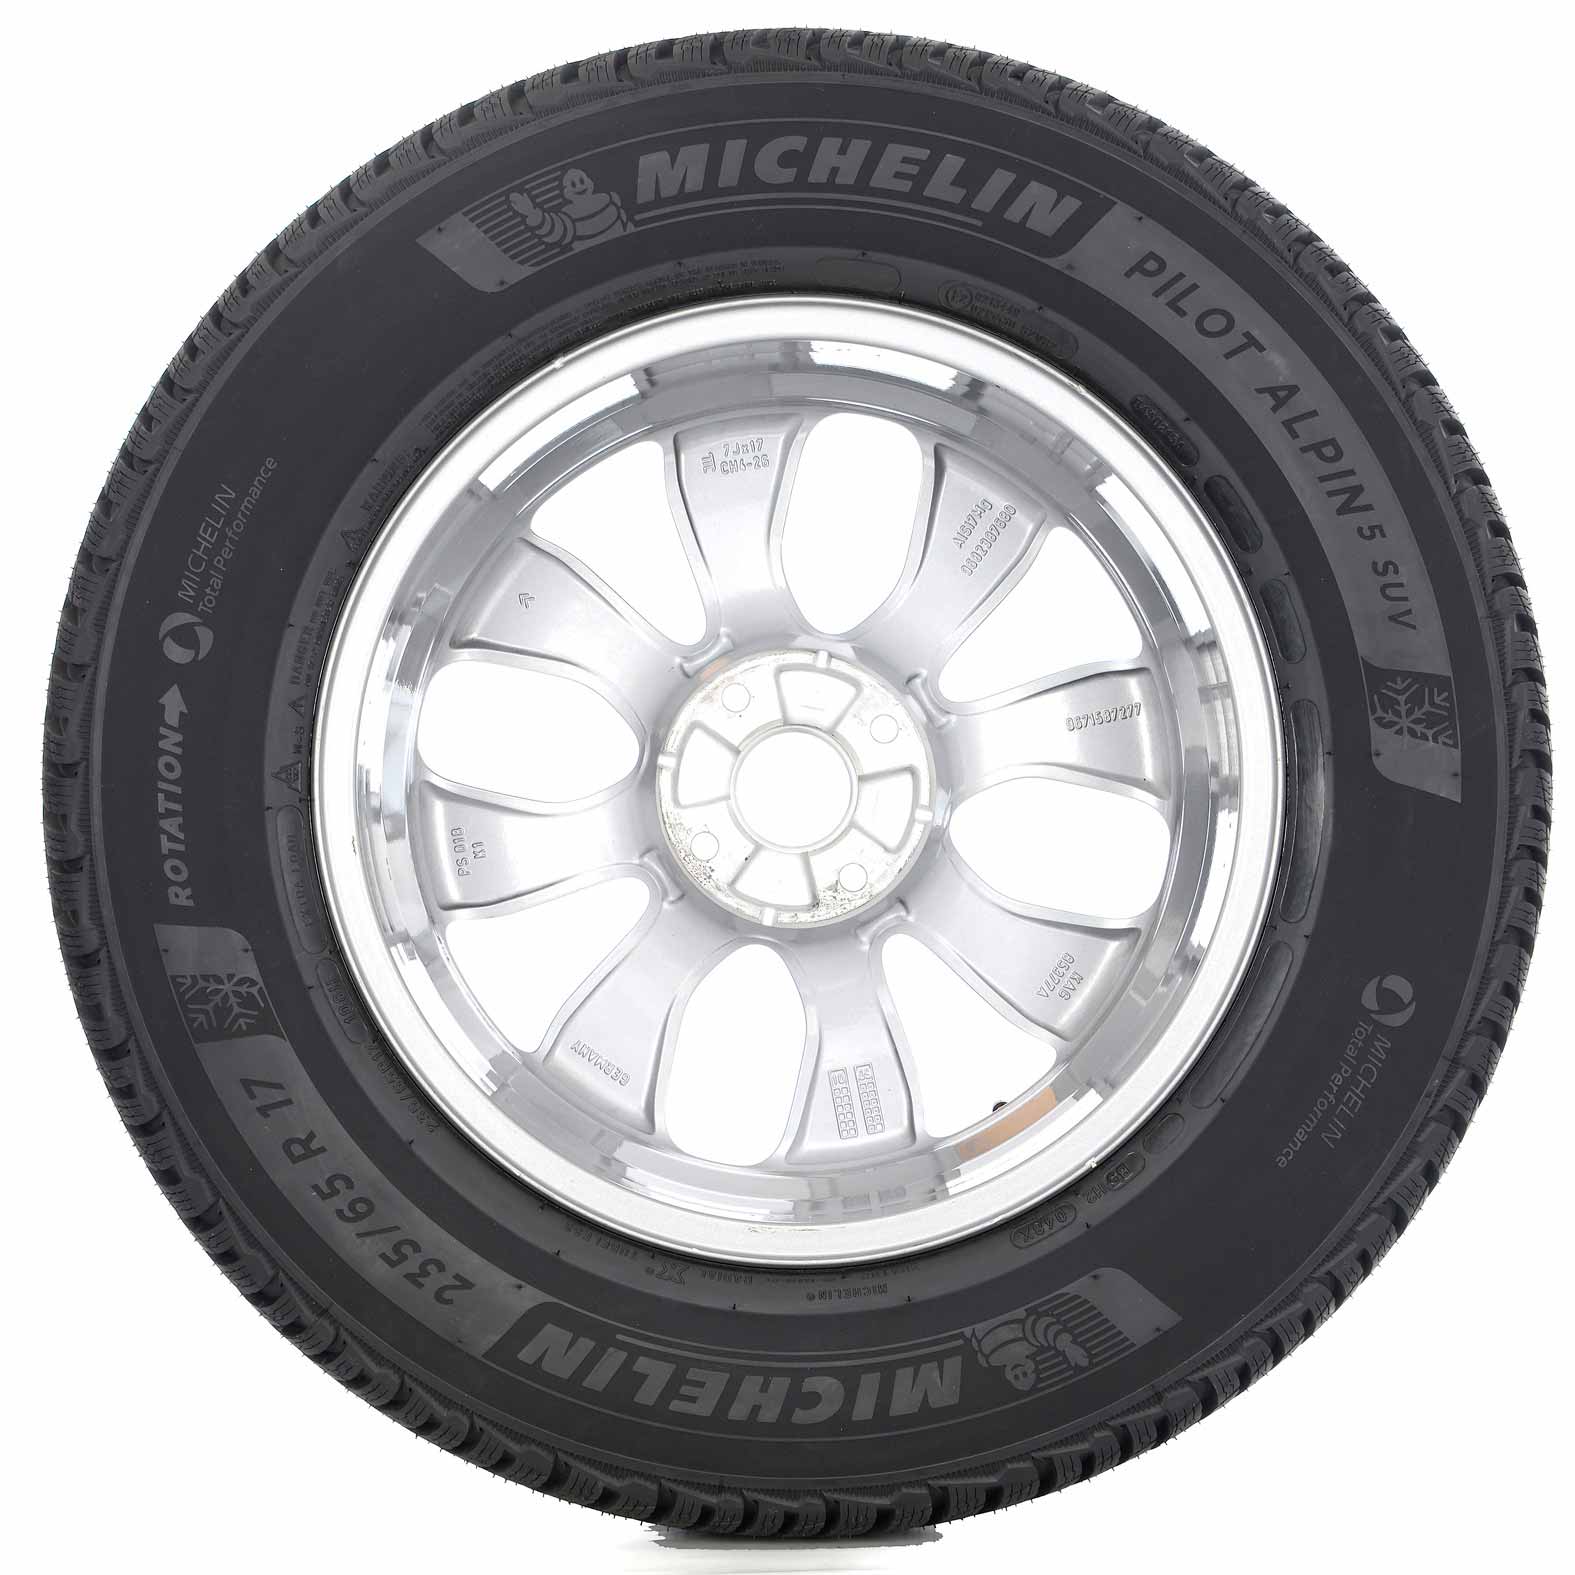 SUV Tire for Tires Pilot | Alpin Michelin Winter 5 Kal